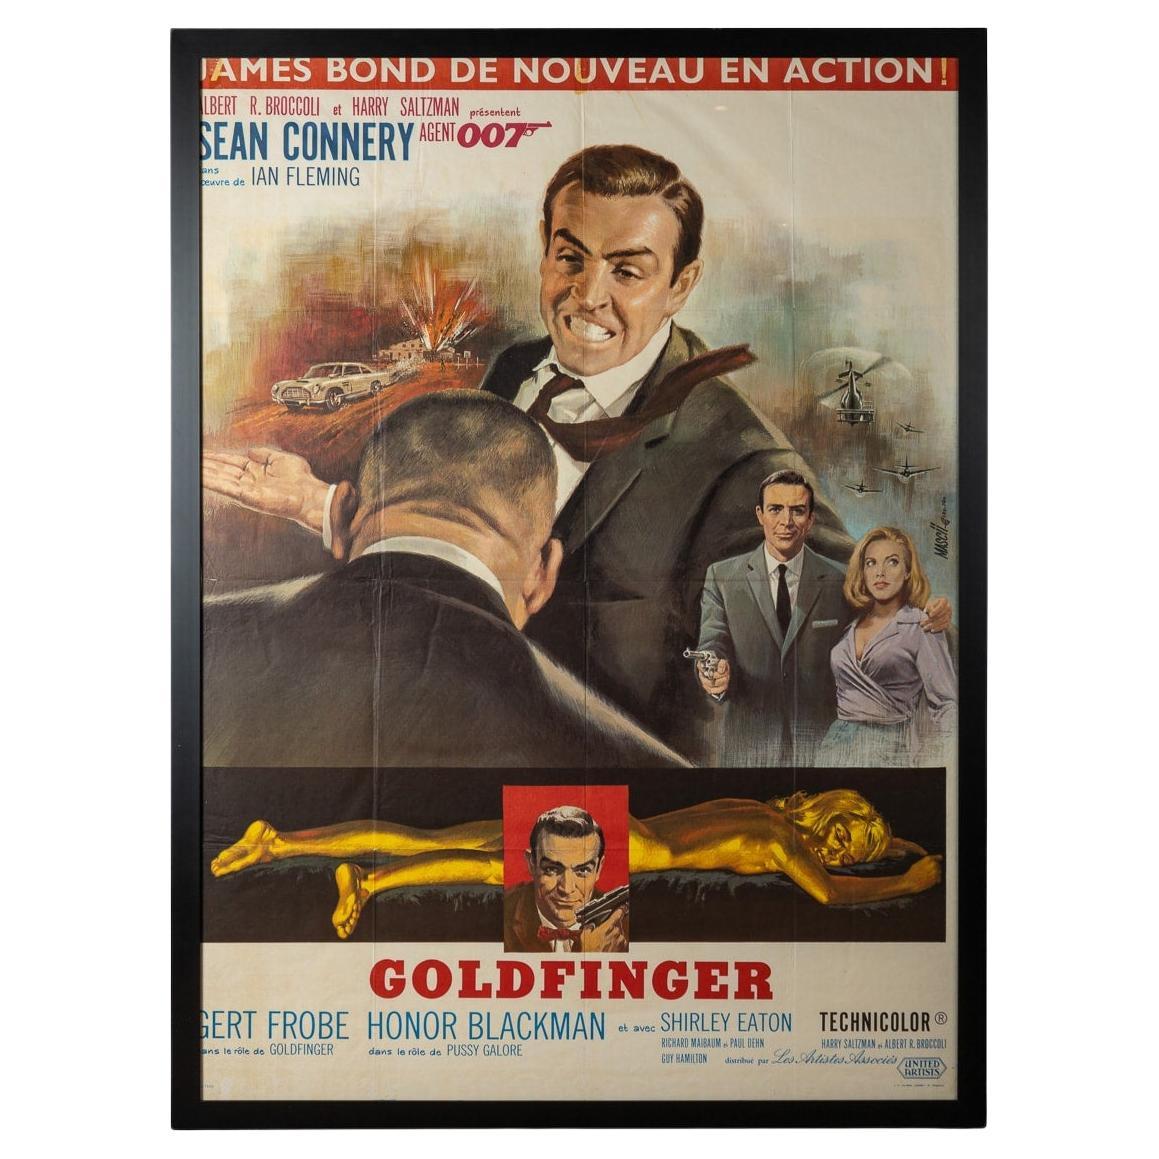 Original French Release James Bond Goldfinger Poster c.1964 For Sale